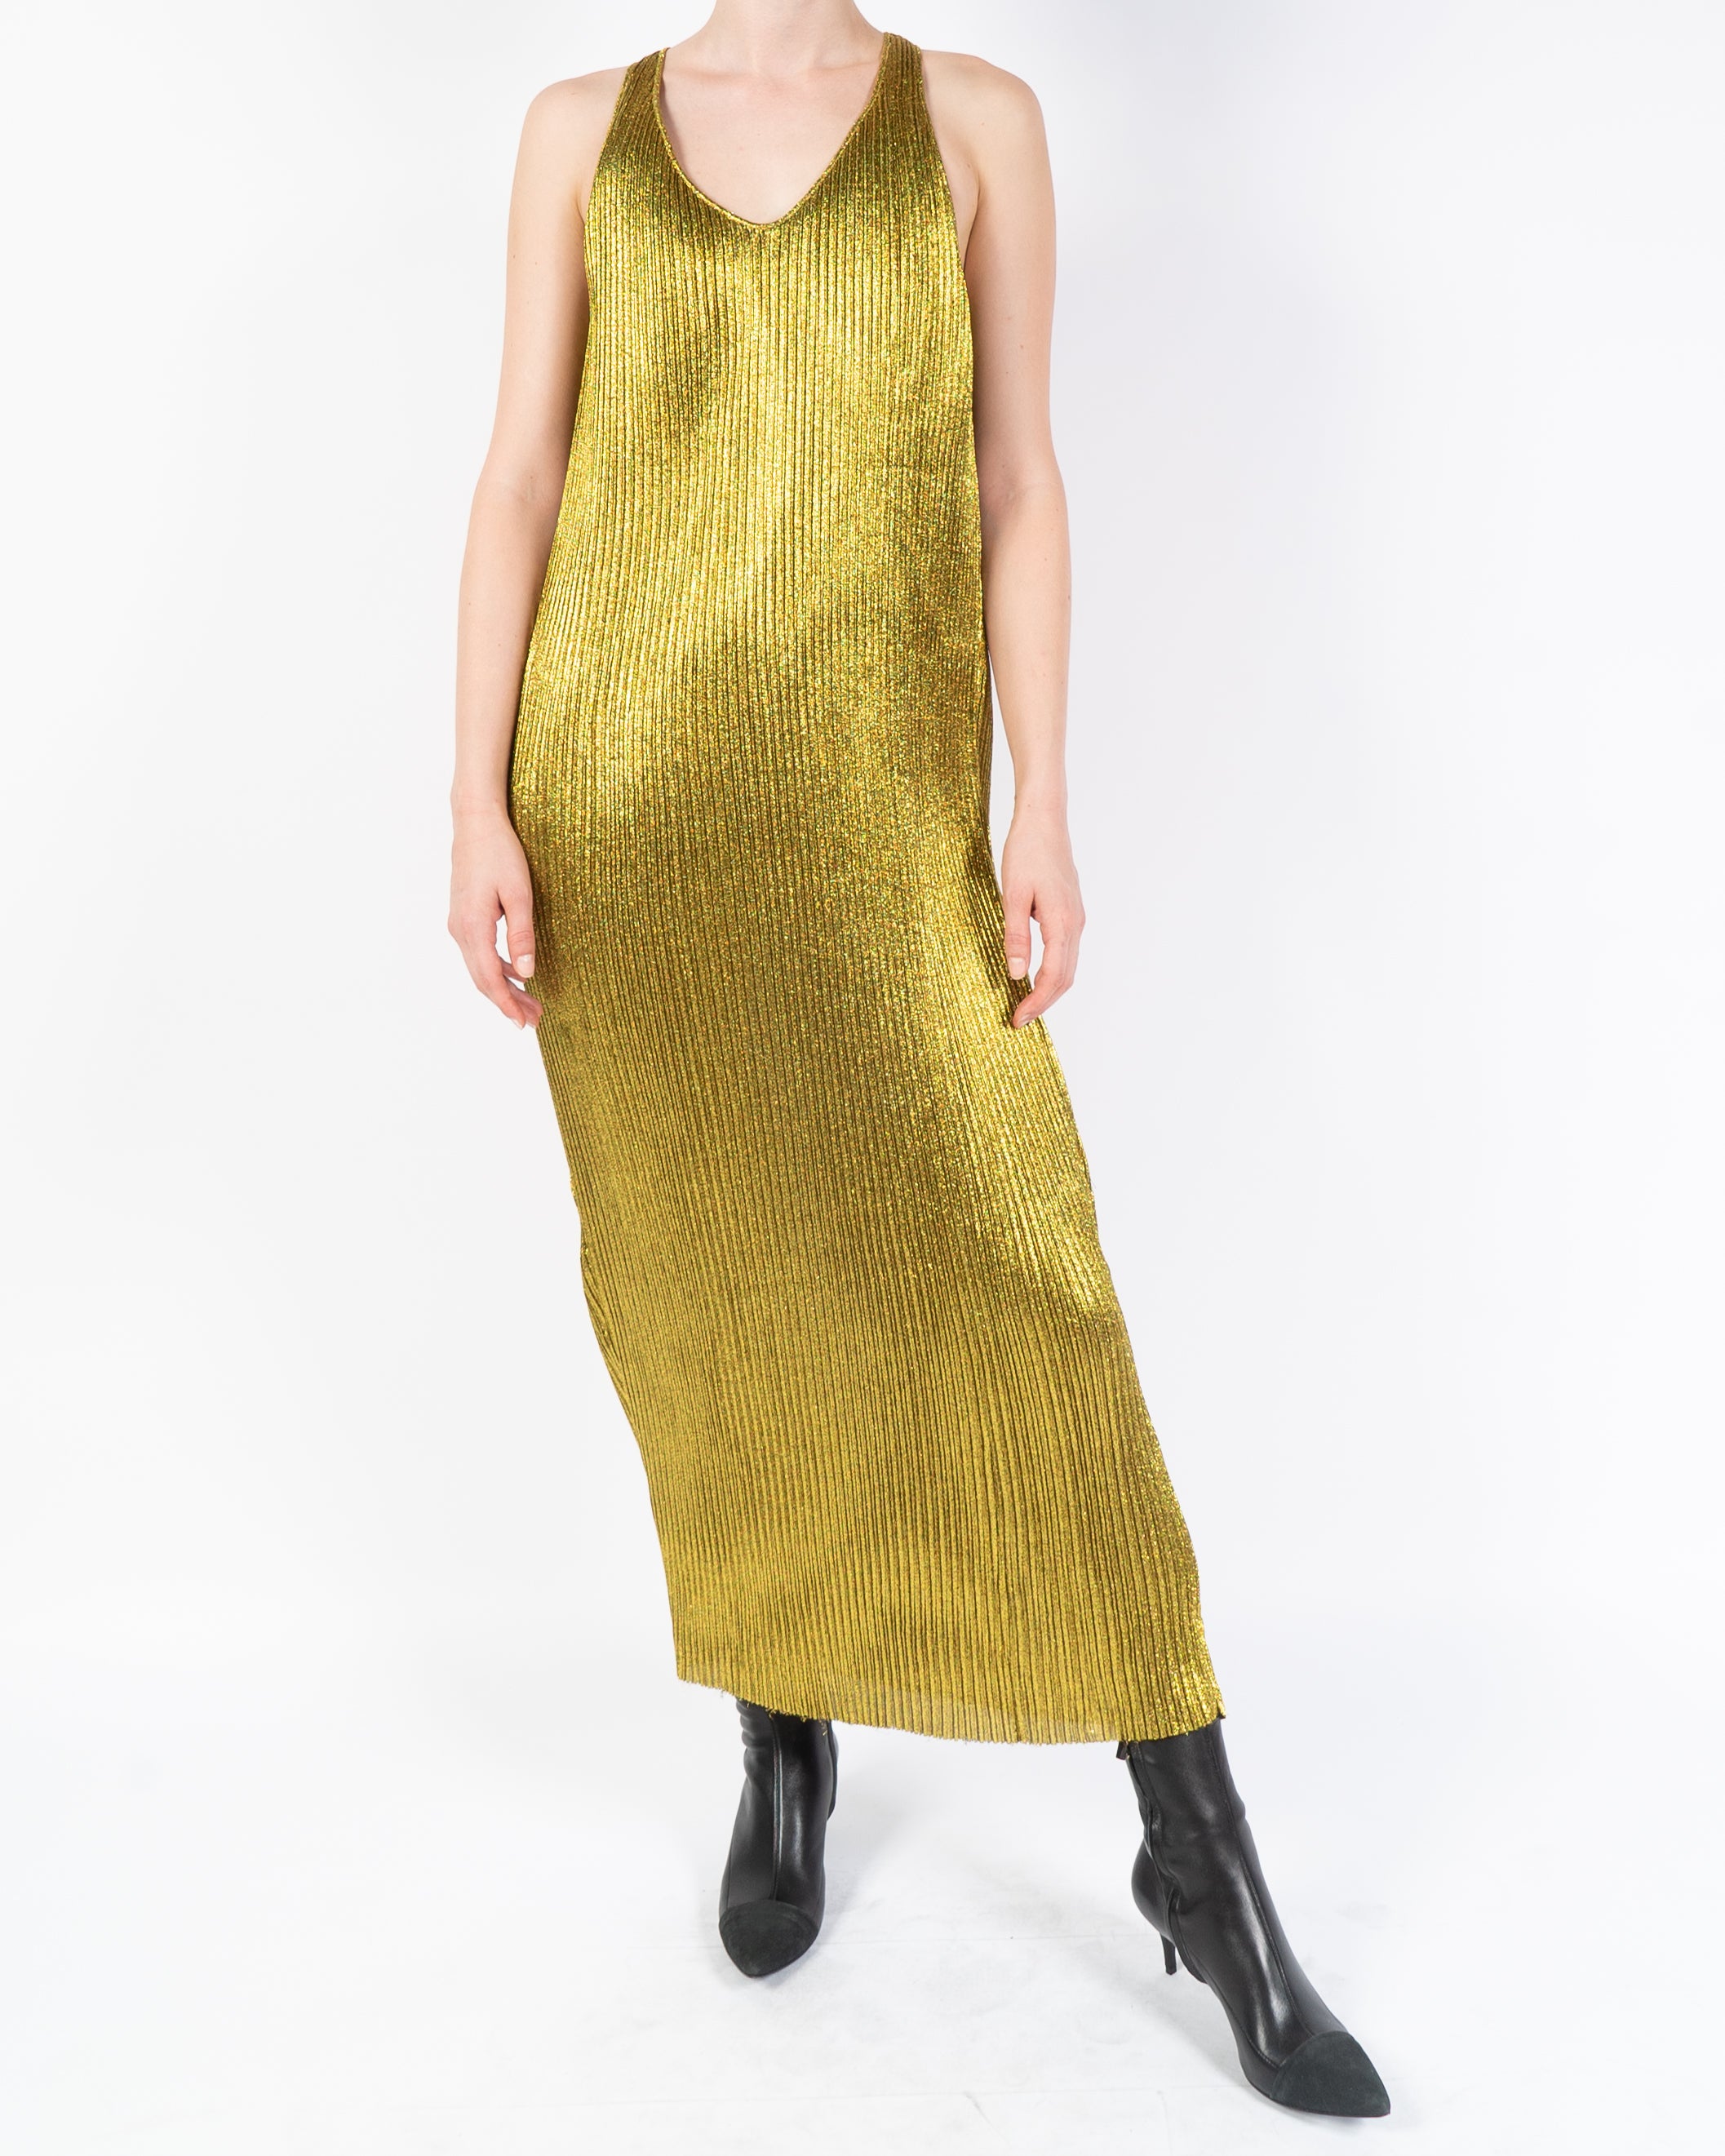 SS17 Mimas Yellow Glitter Runway Dress